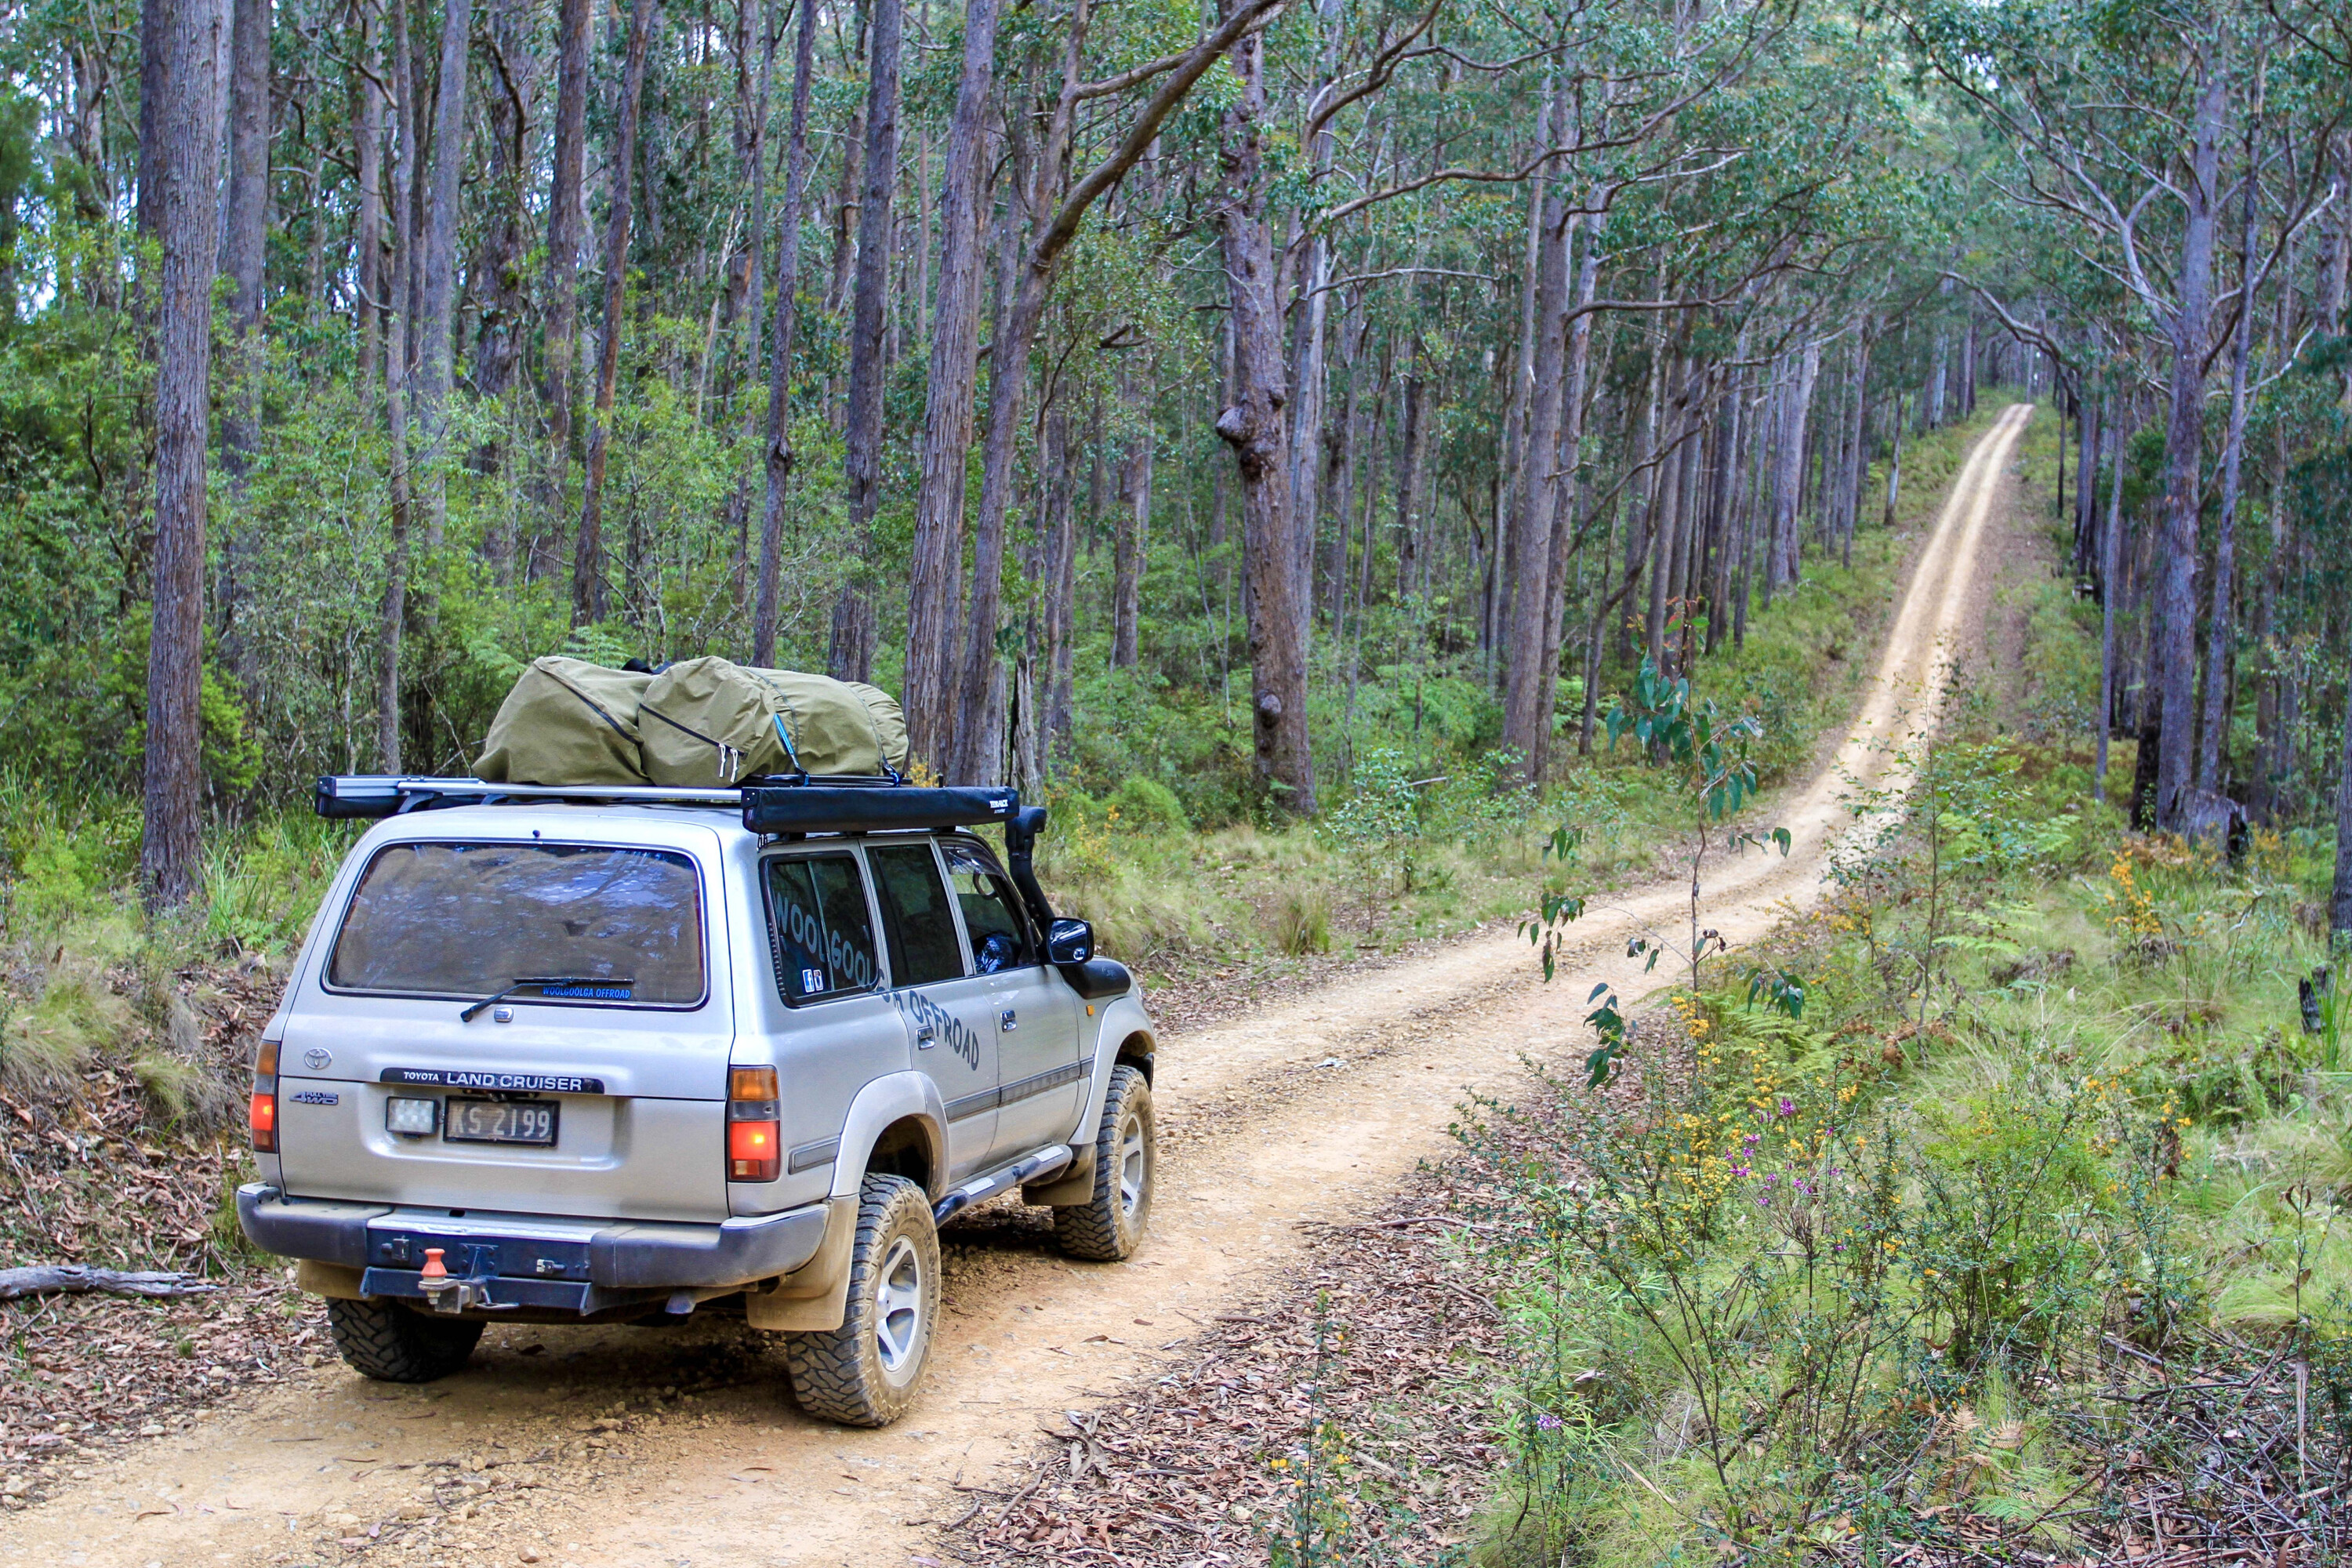 9d452233/4x4 australia explore oxley wild national park great touring trails jpg